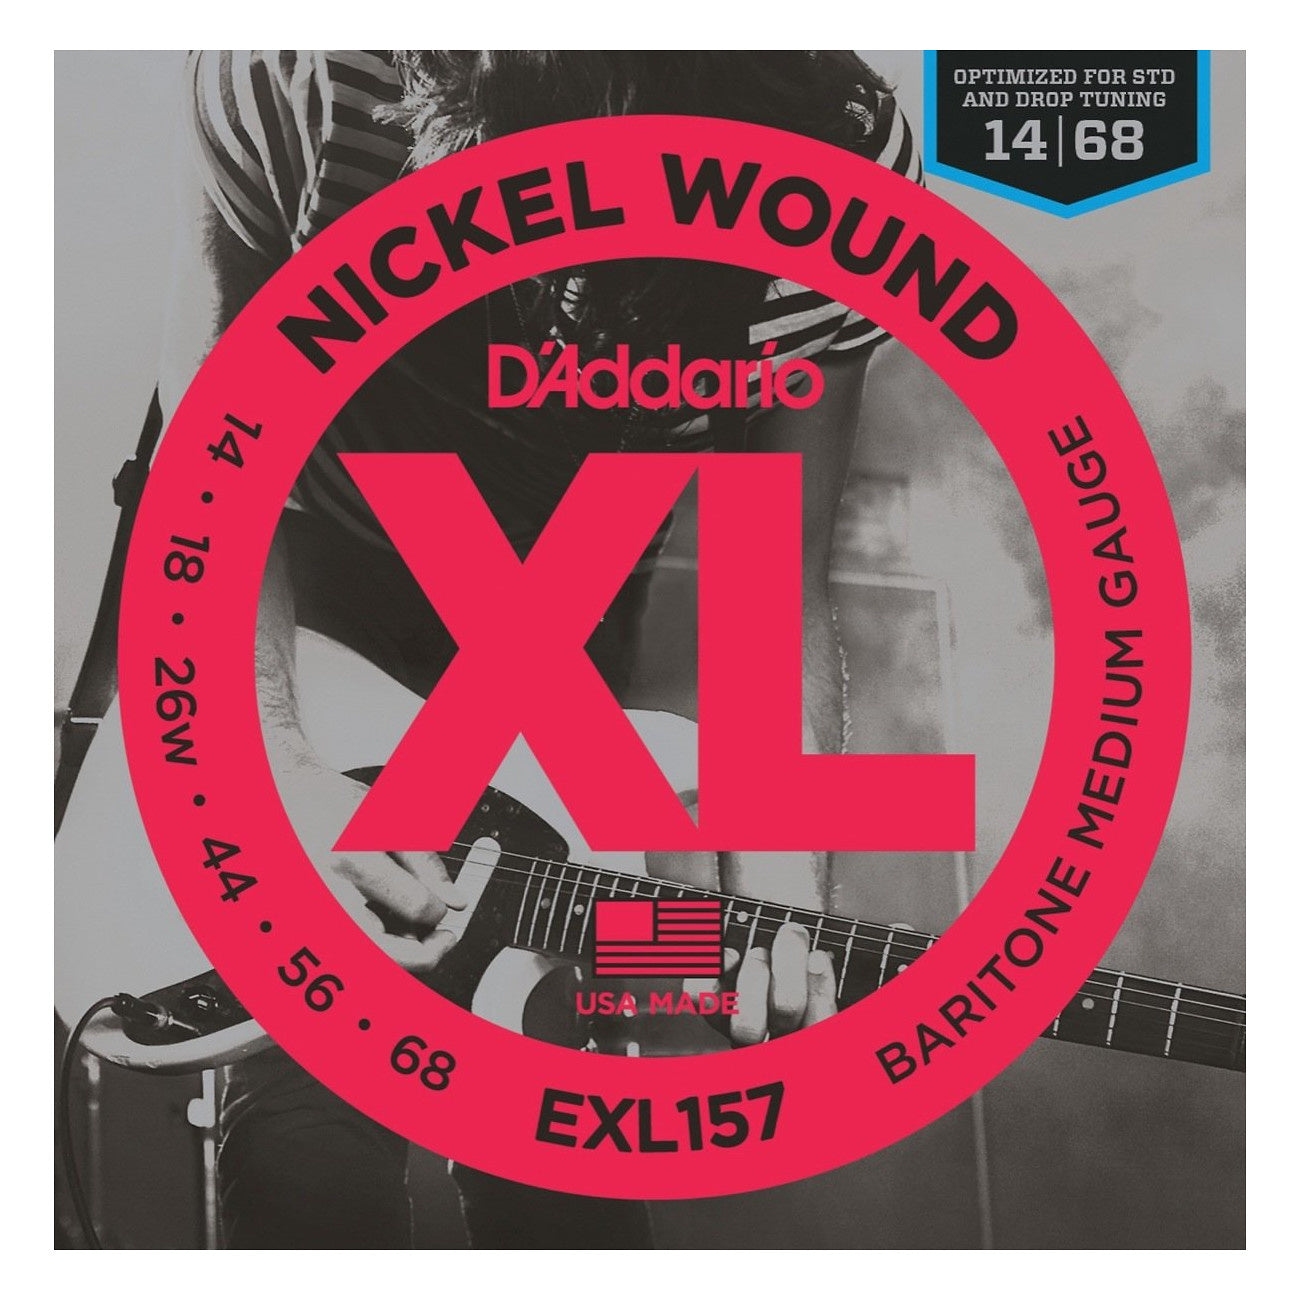 D'Addario EXL157 Nickel Wound Baritone Electric Guitar Strings, EXL157, Medium, 14-68